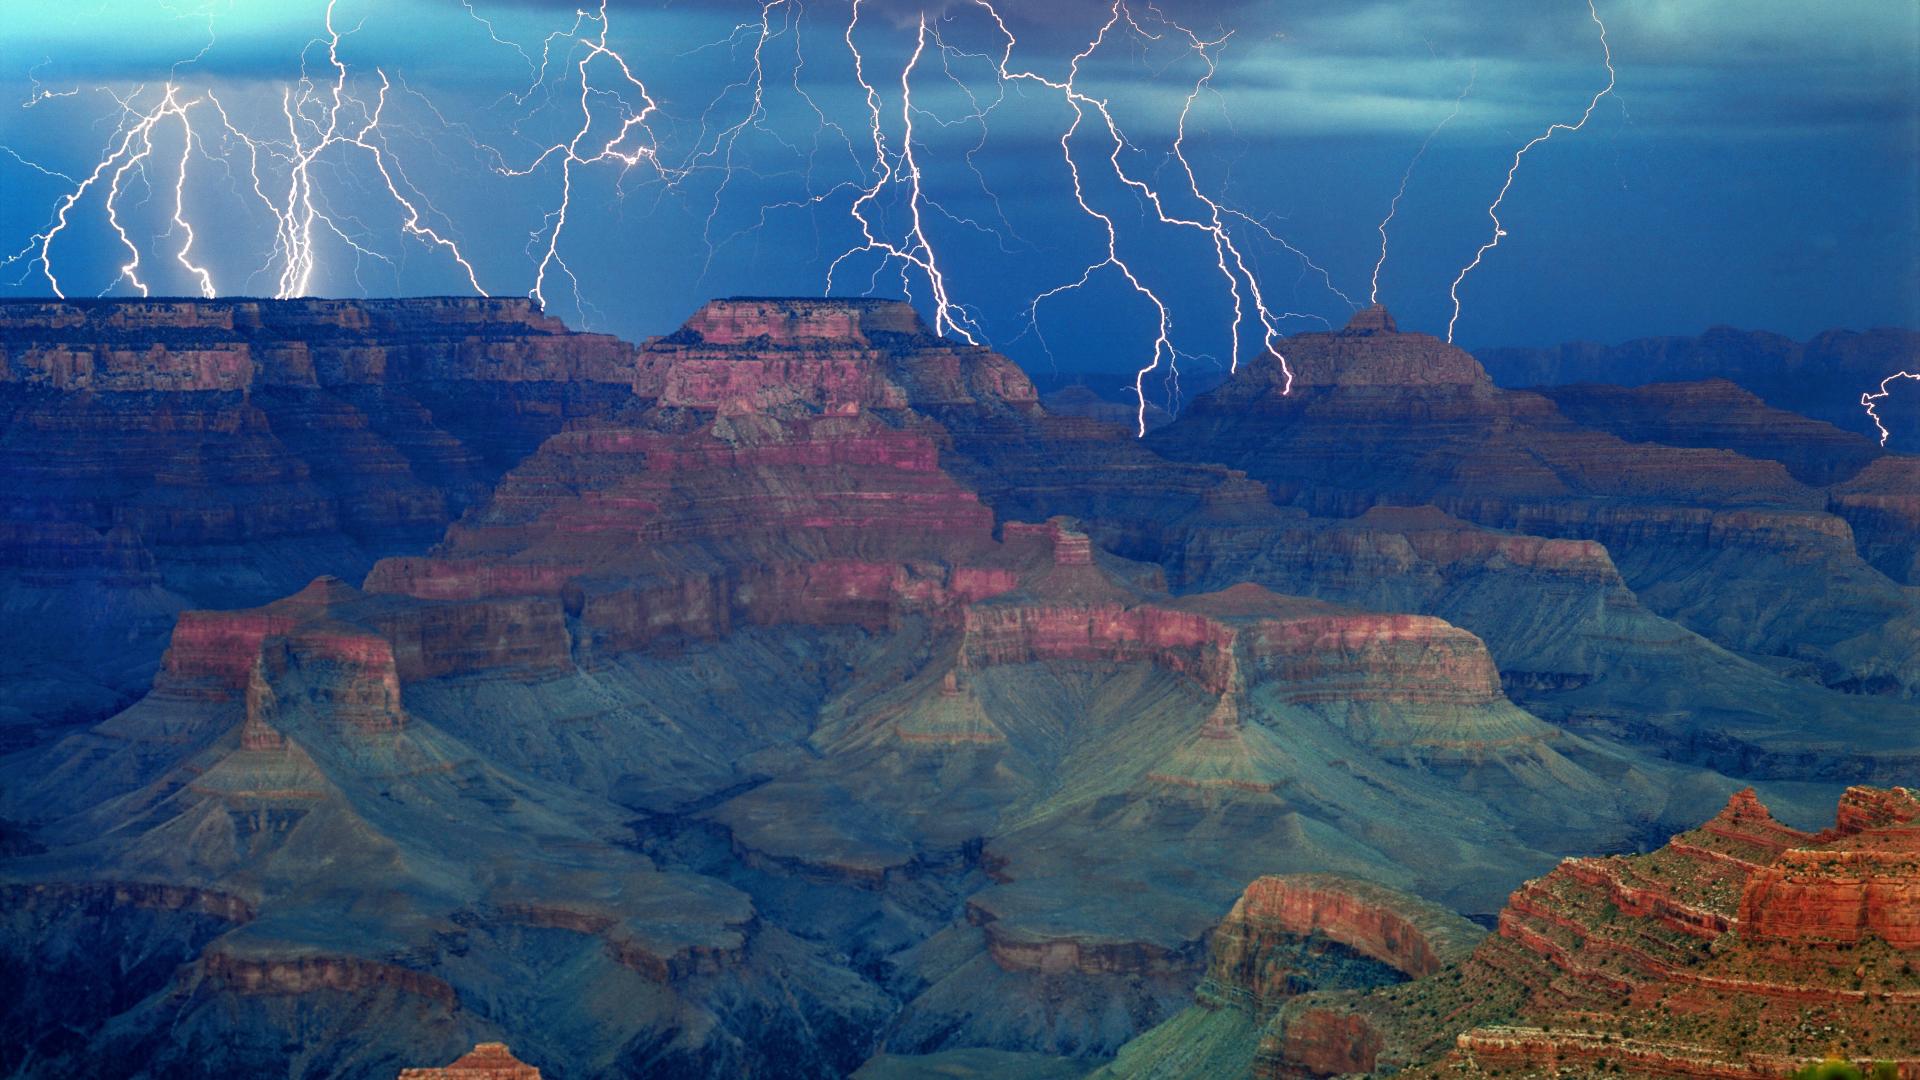 Background   The Gathering Storm Grand Canyon National Park Arizona